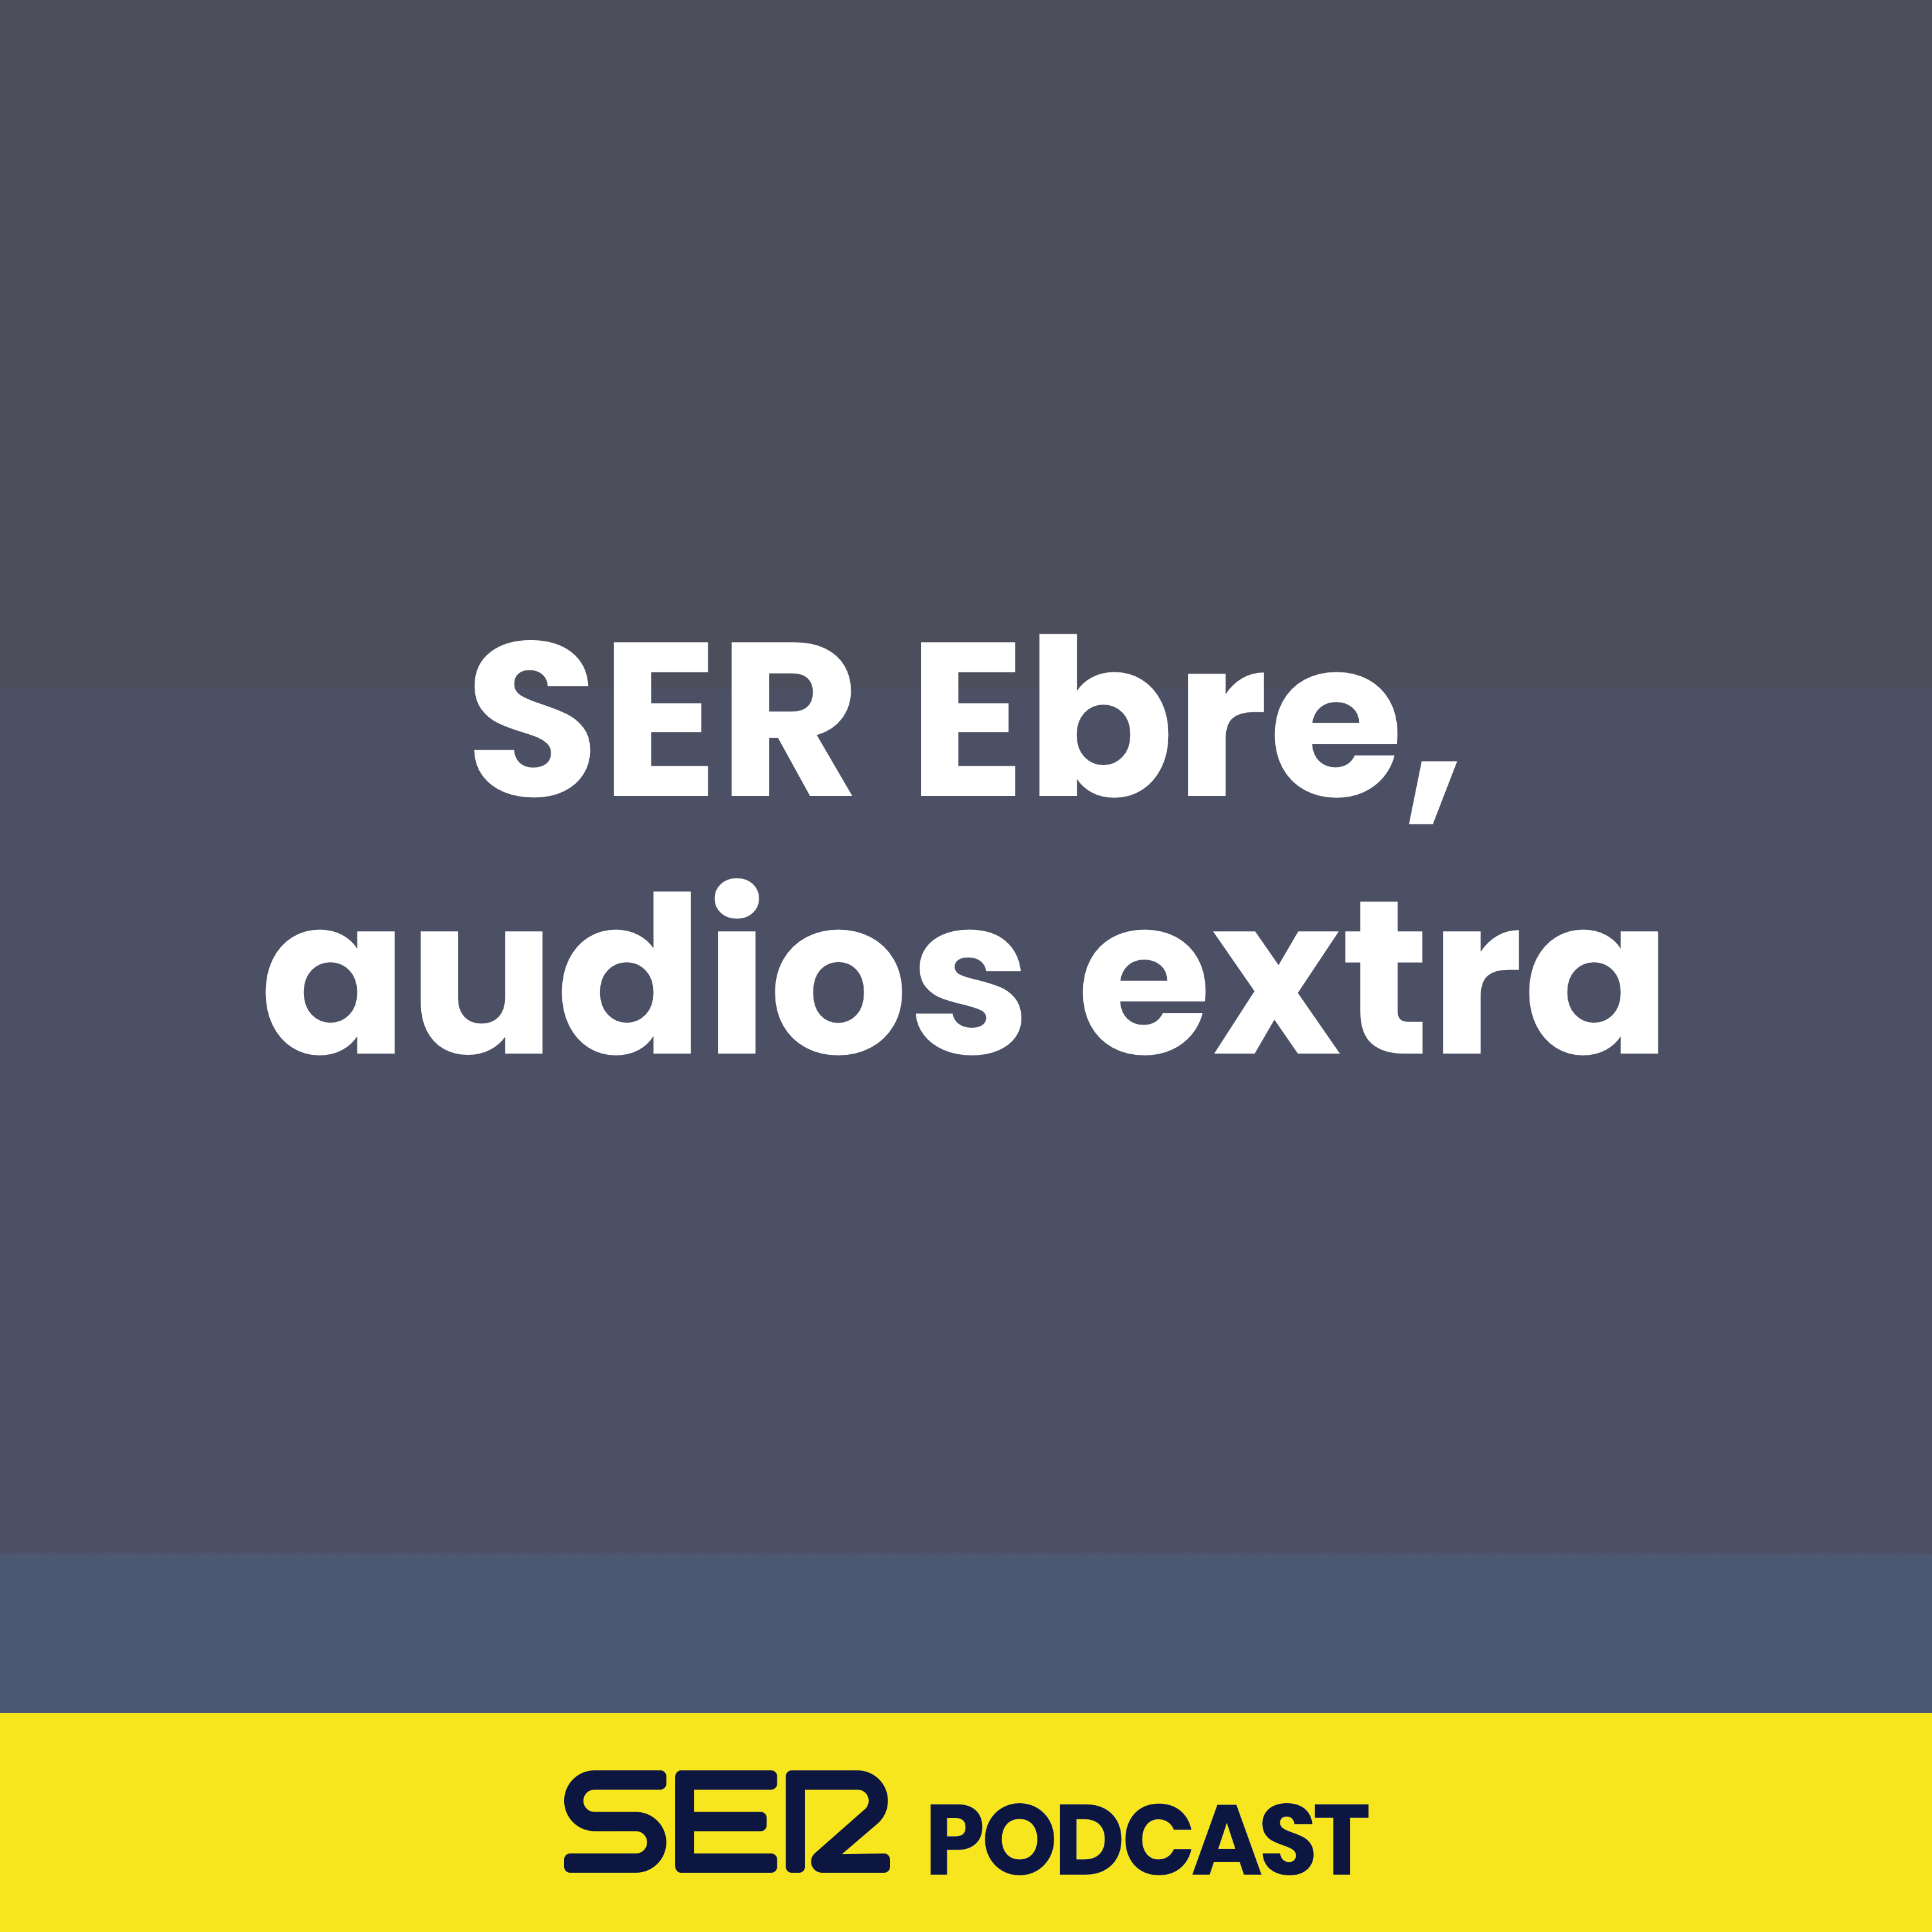 SER Ebre, audios extra